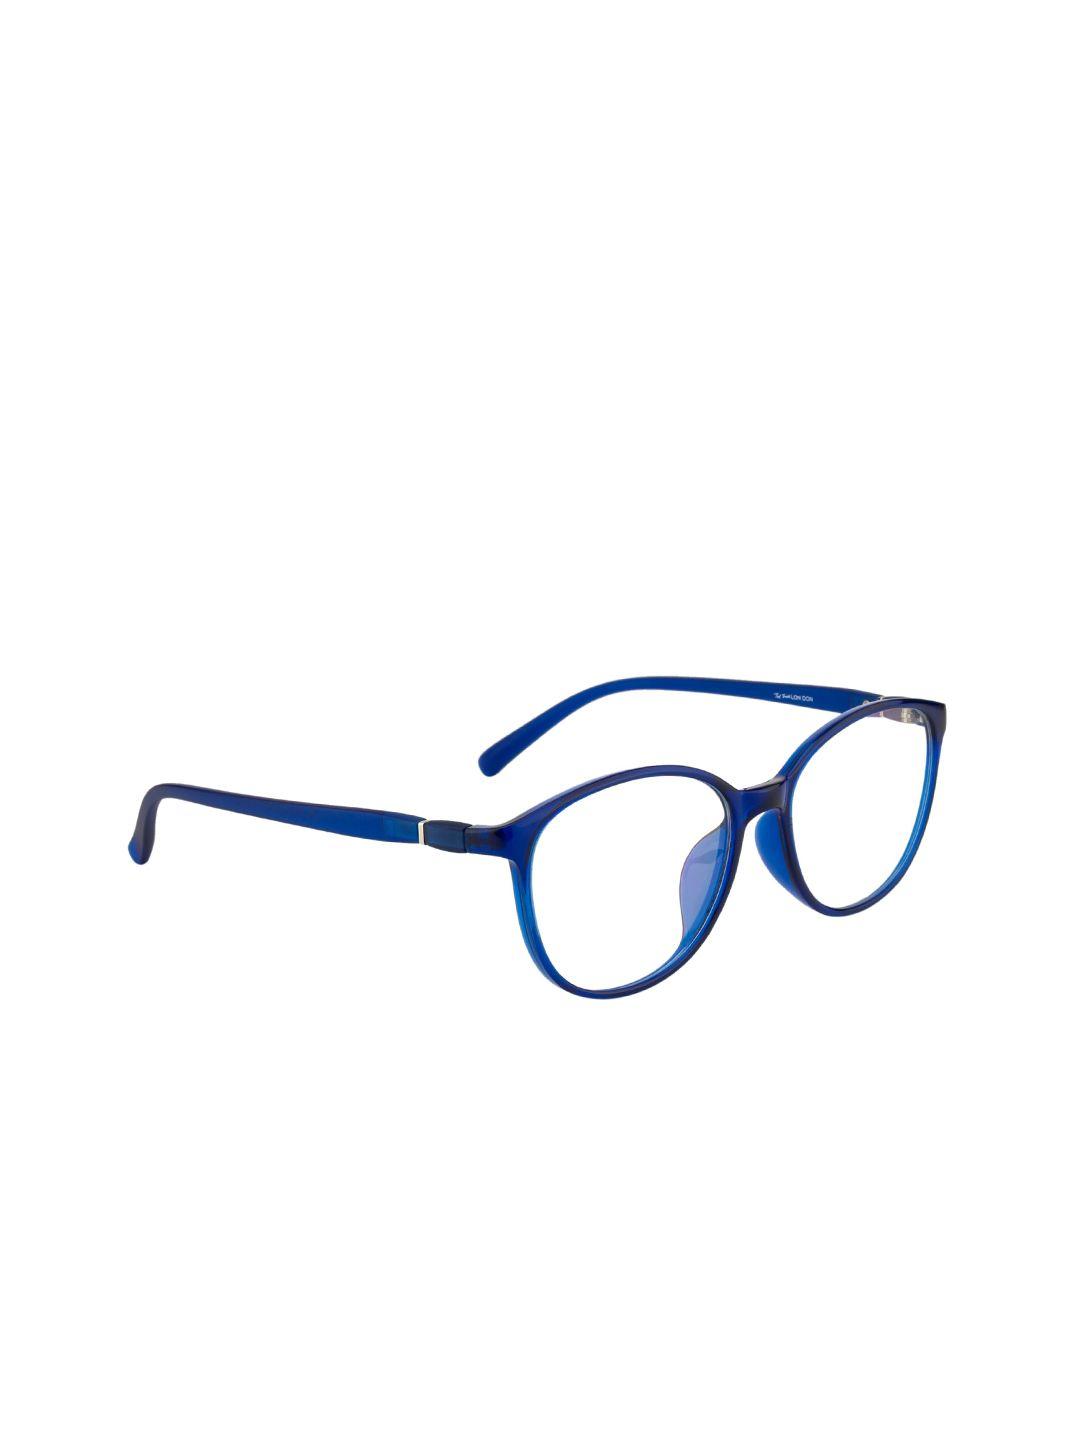 ted smith unisex blue full rim round frames eyeglasses